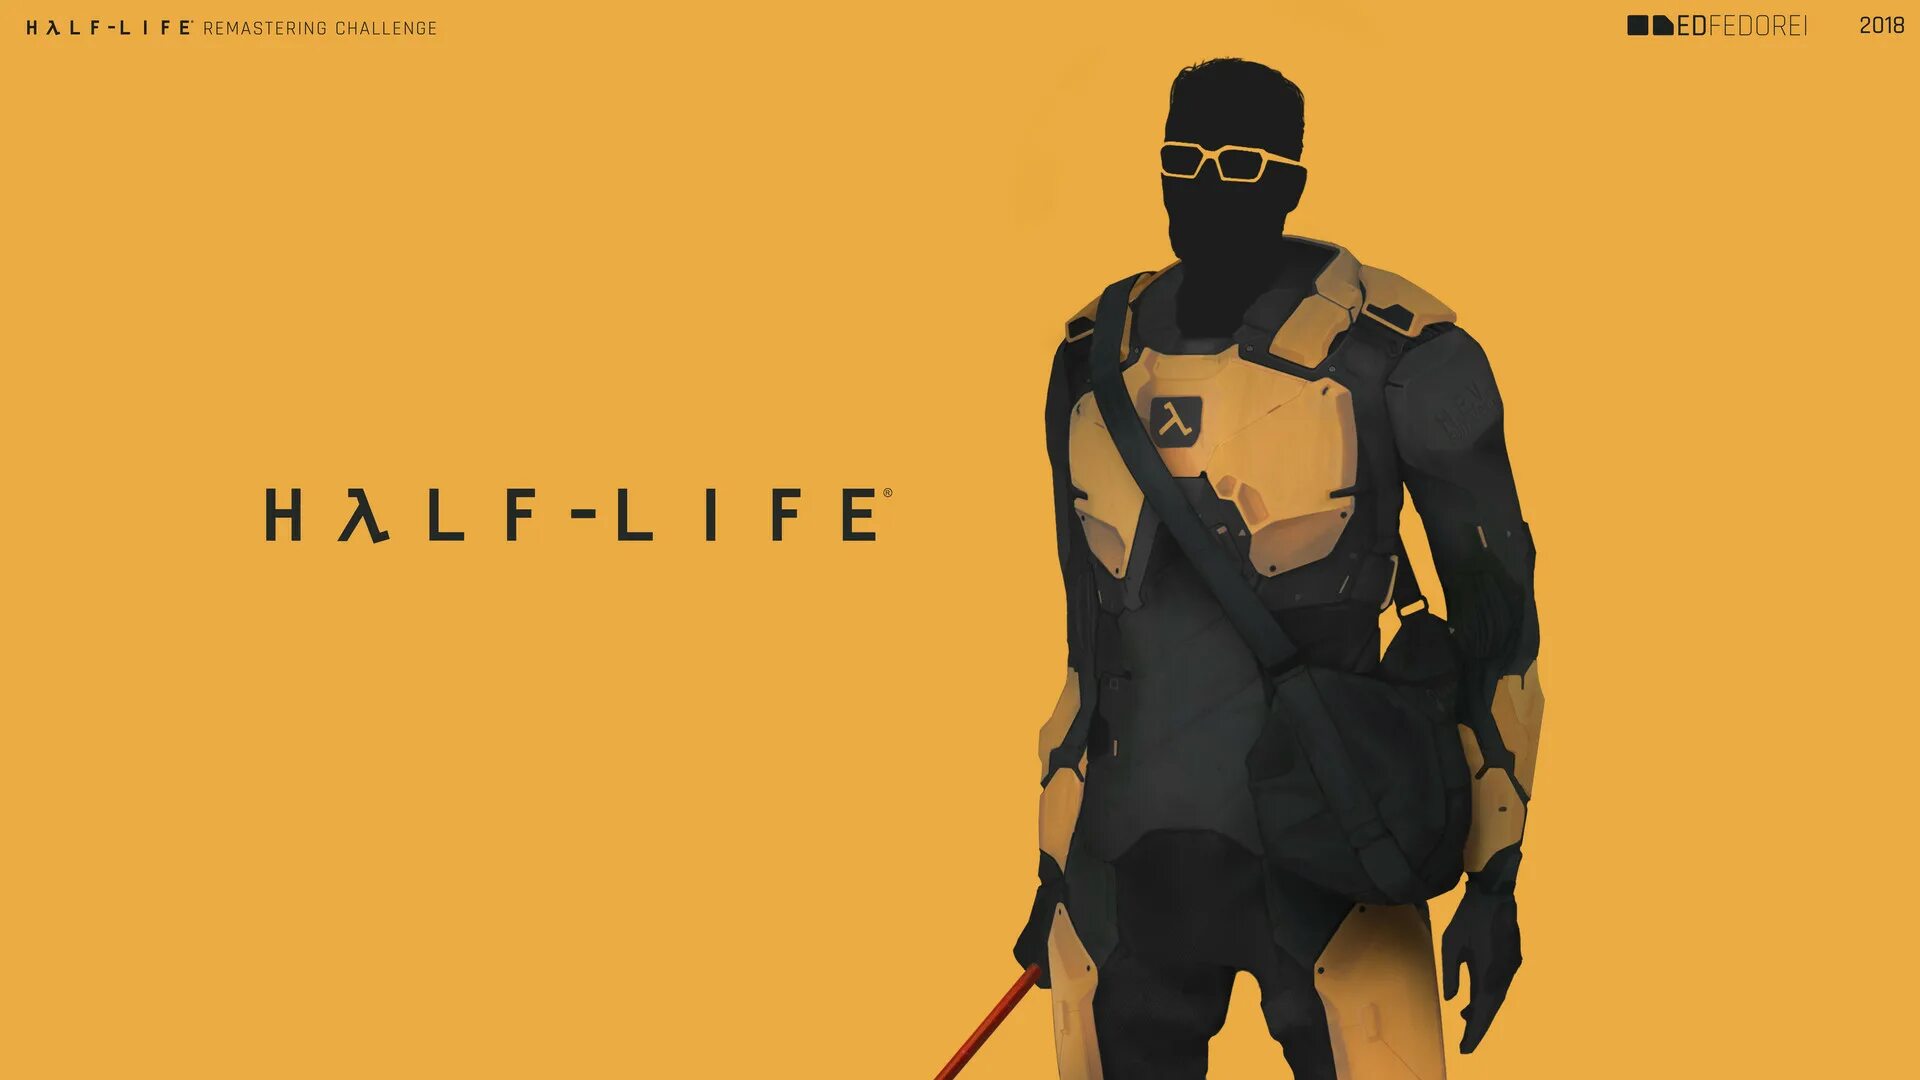 Half Life Remastered. Gordon Freeman HEV. Half-Life Remastering Challenge.